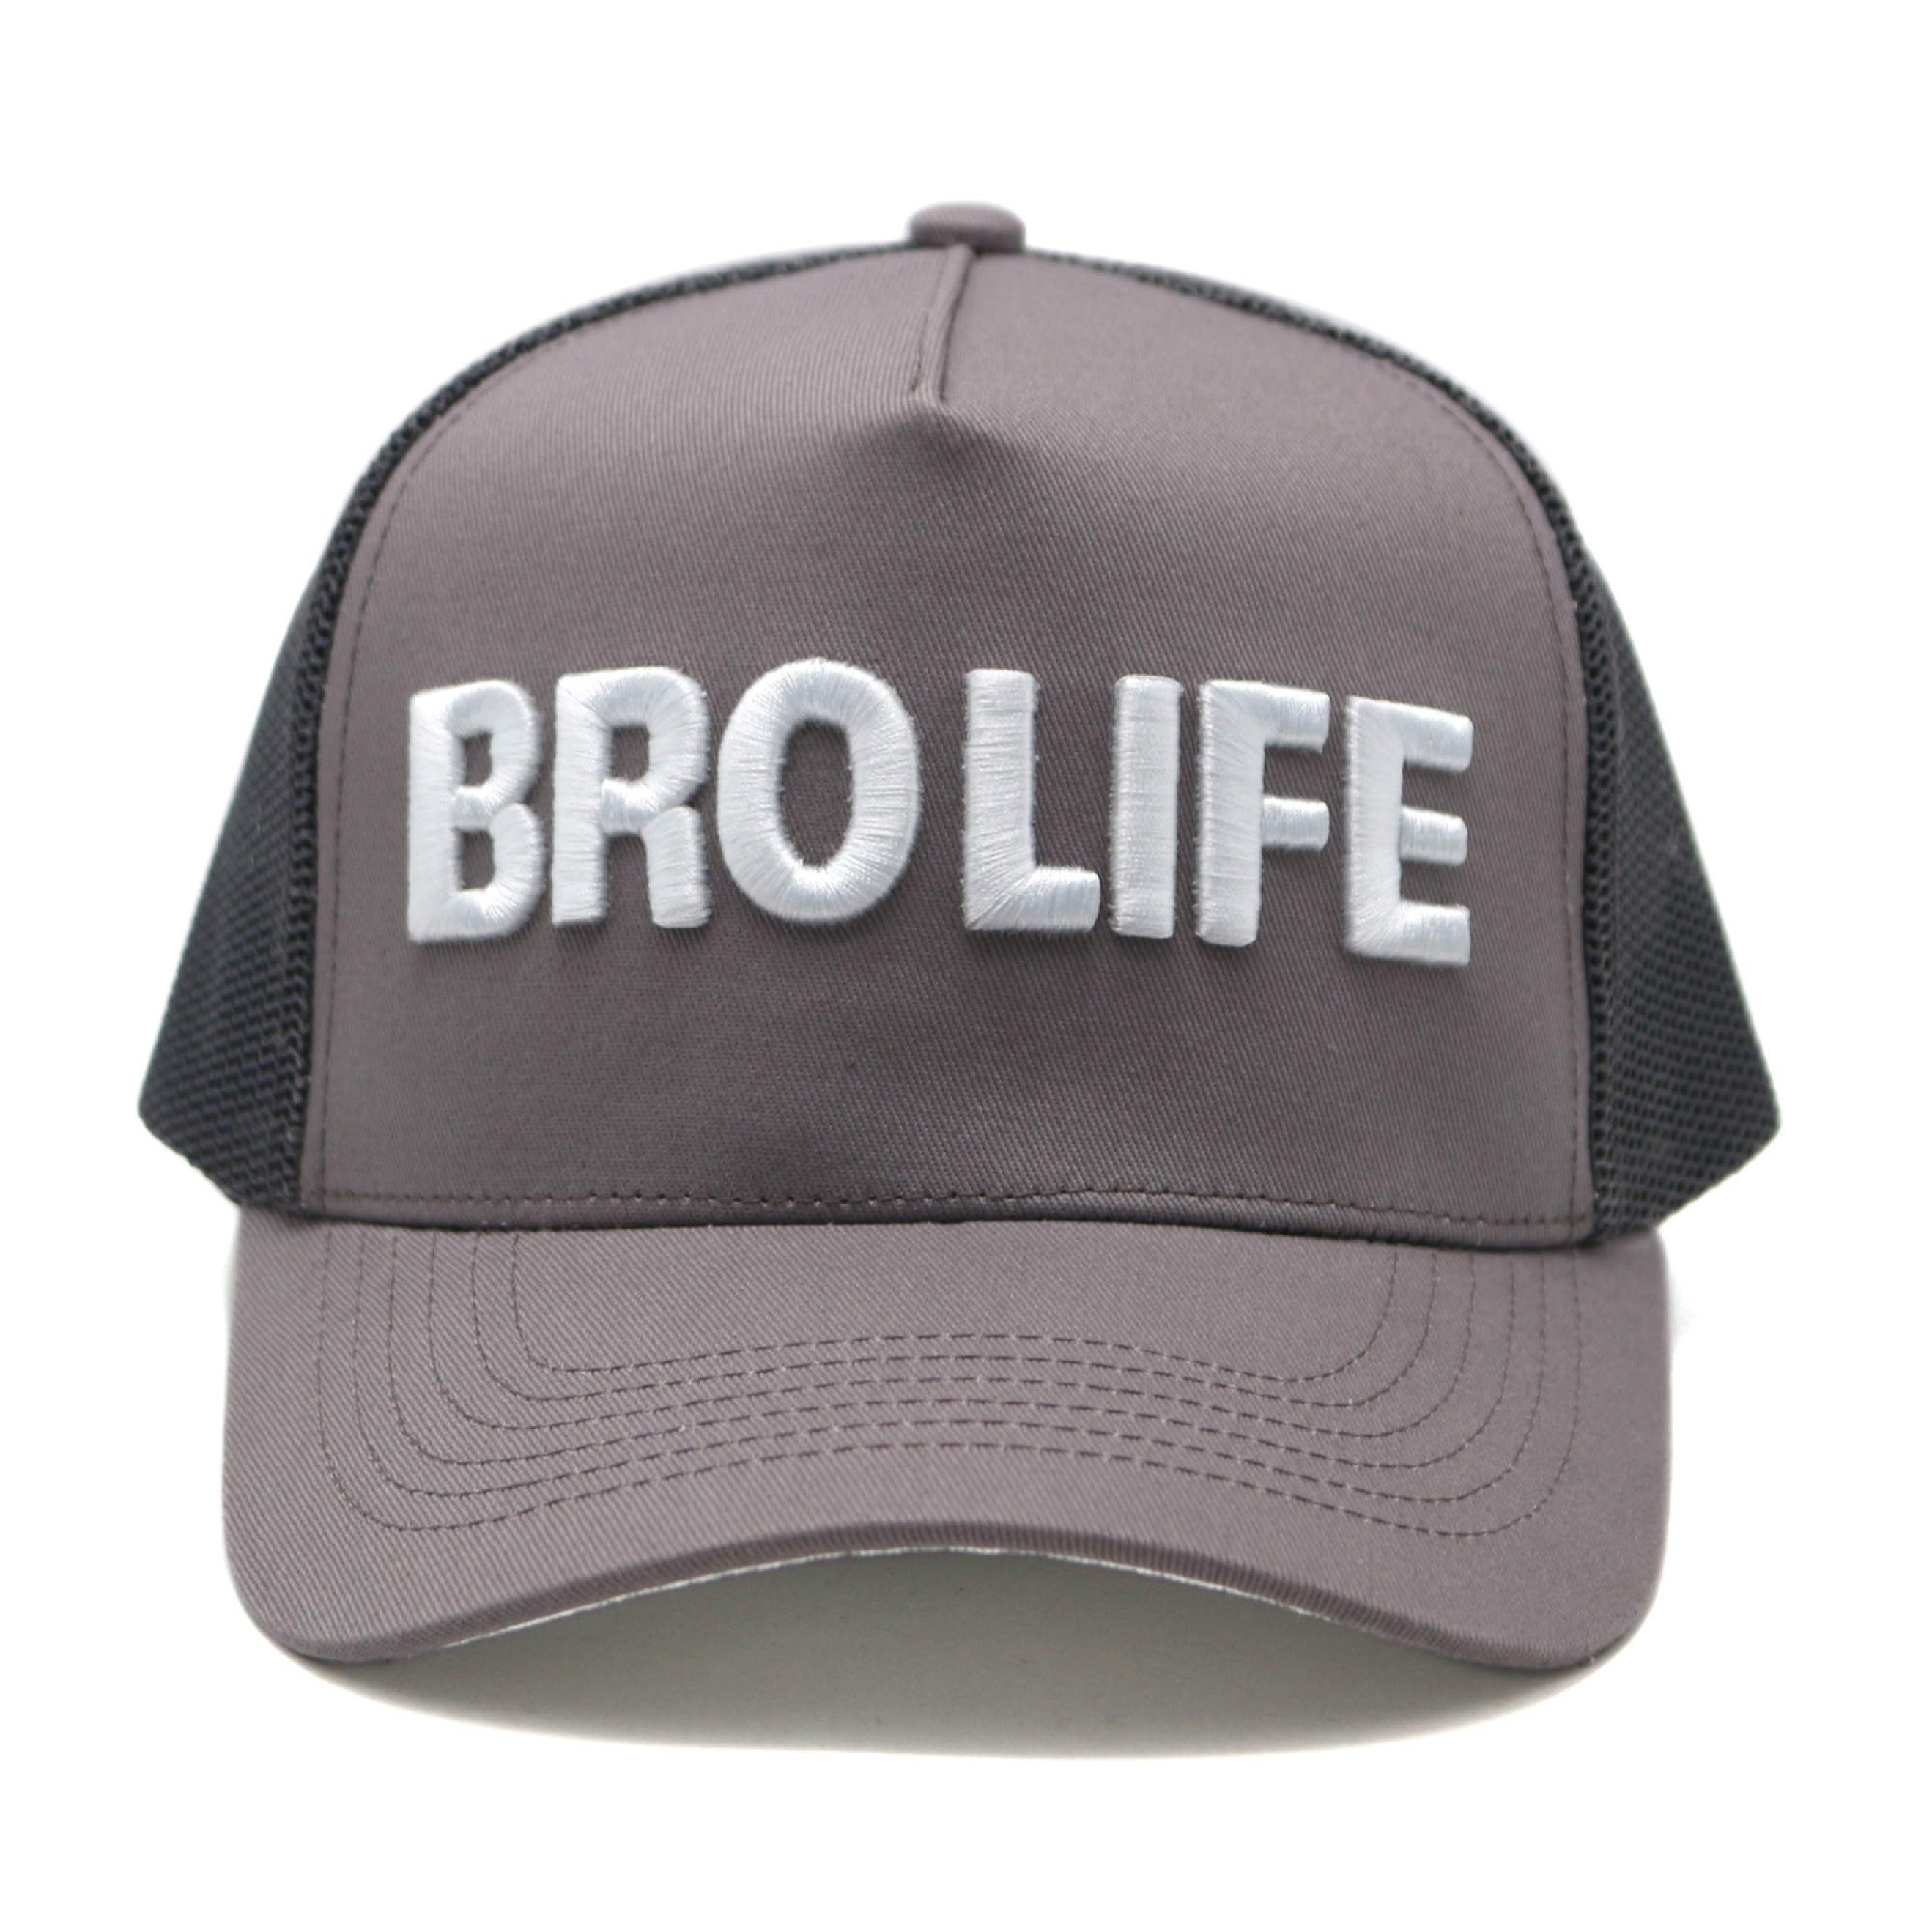 Brolife Trucker Hat